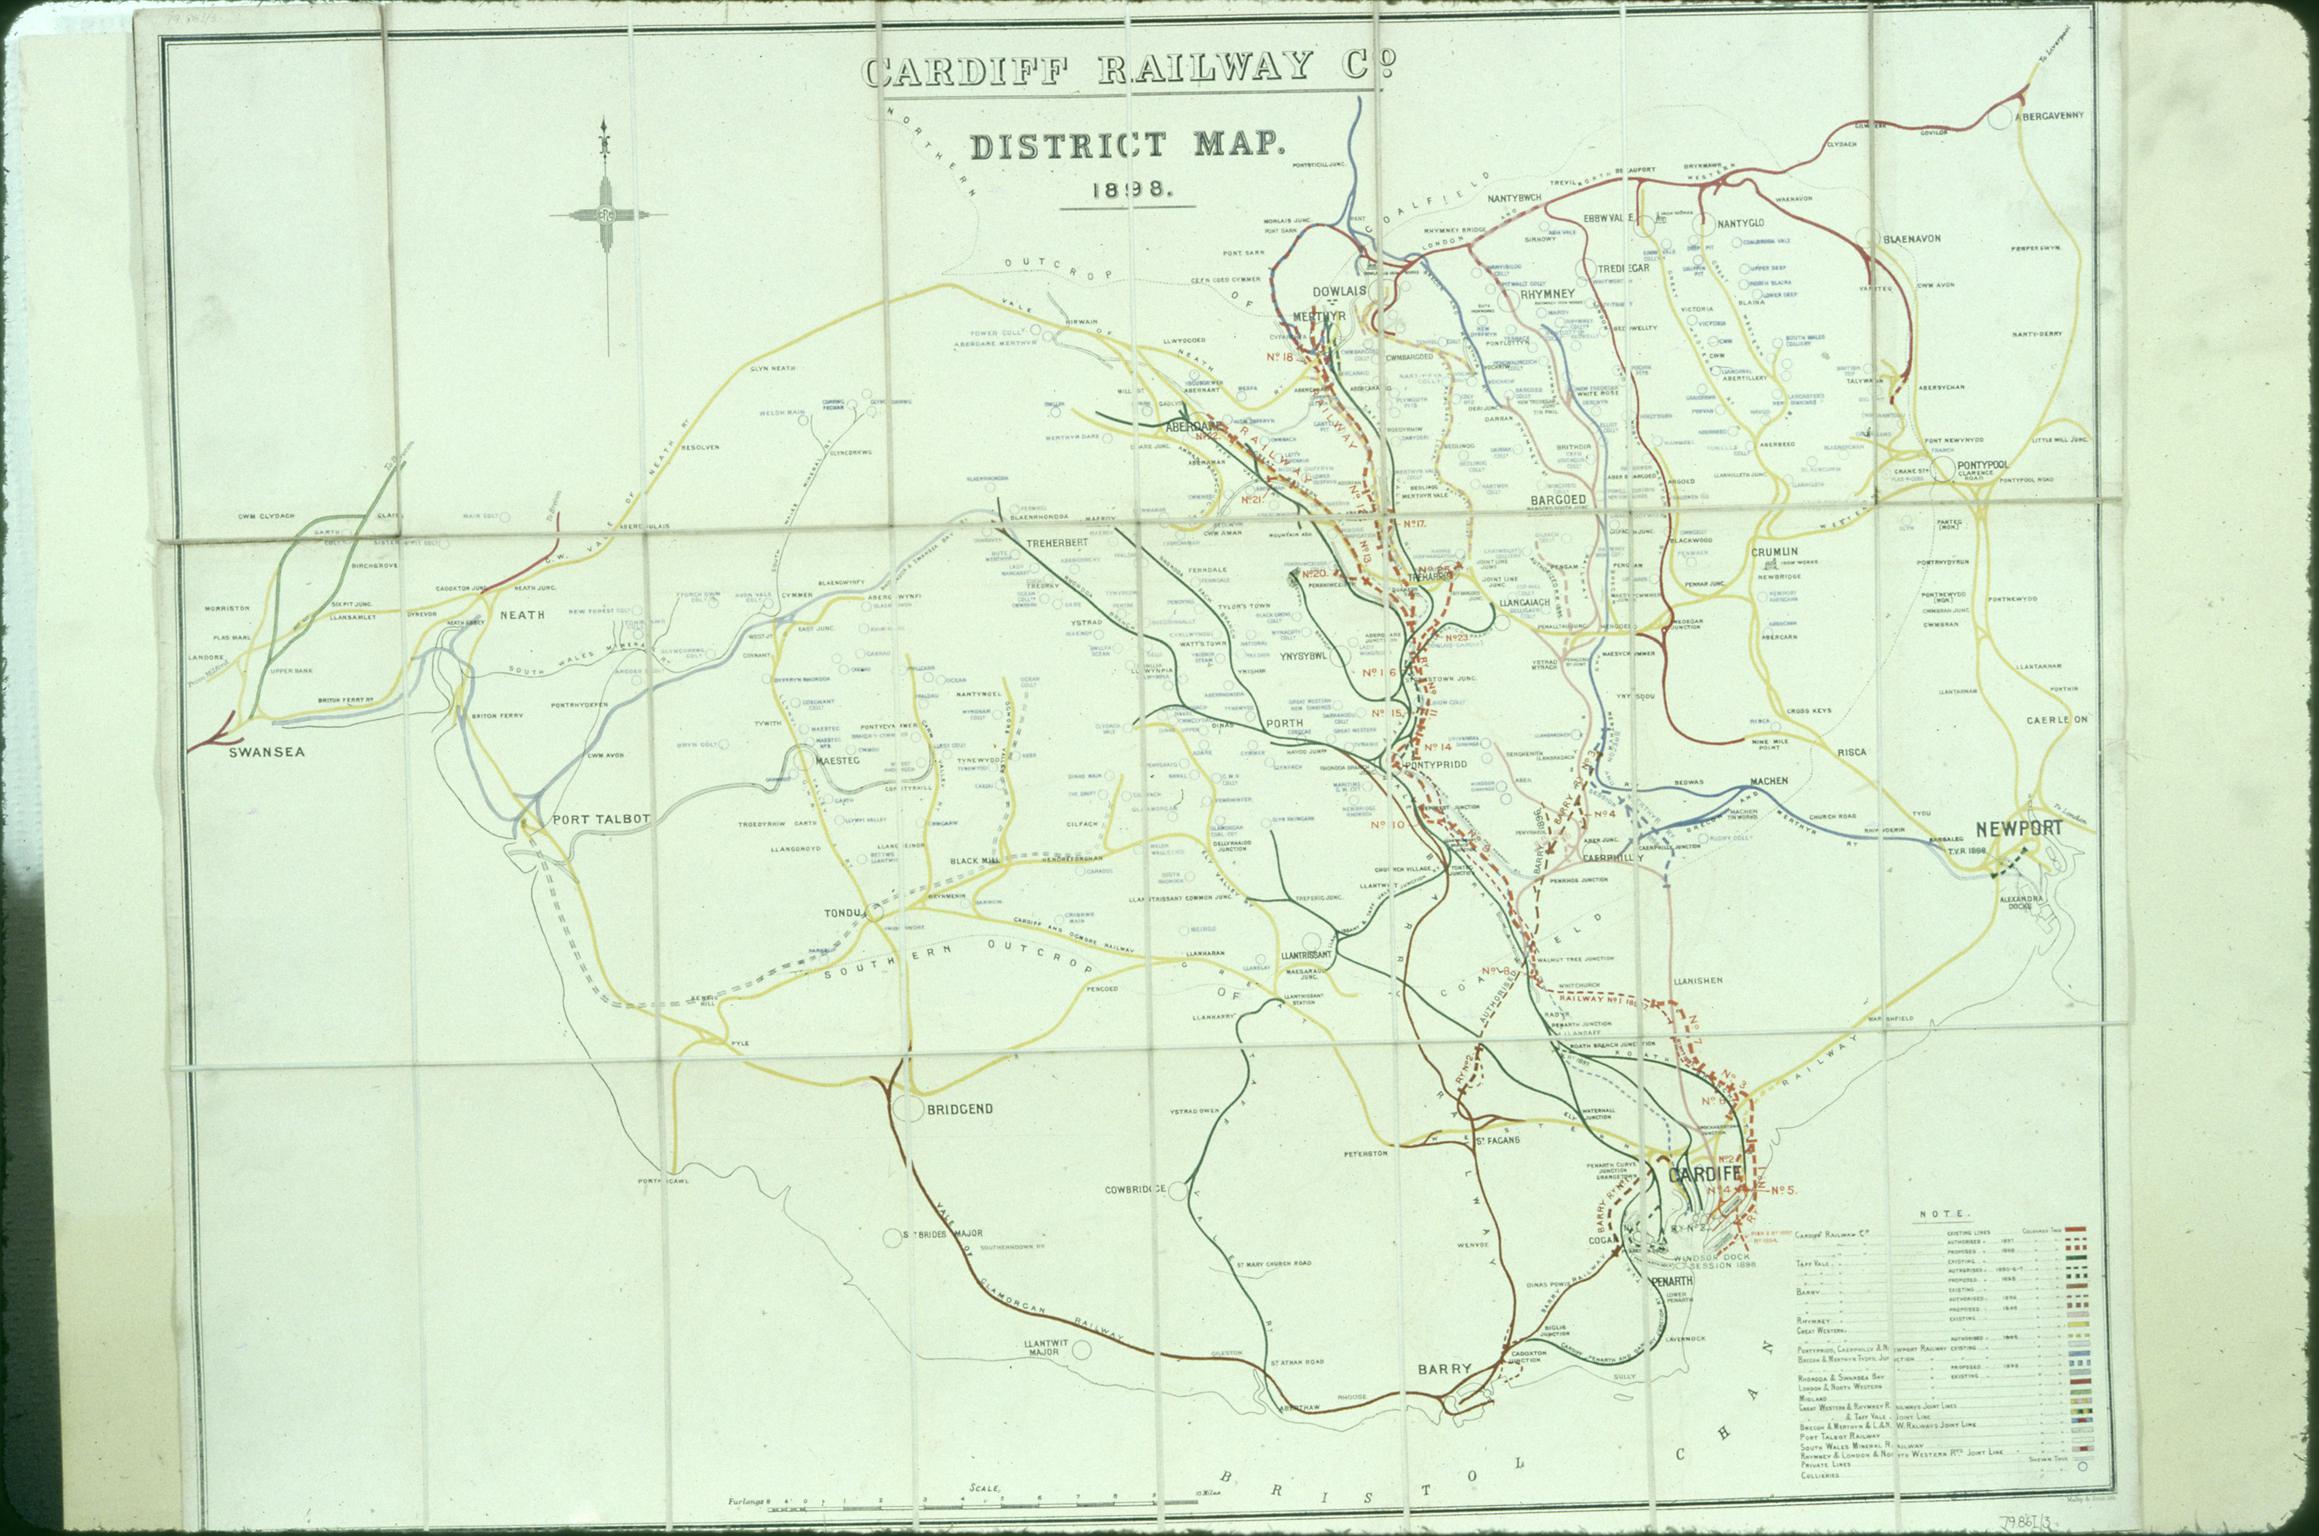 Cardiff Railway Company 1898 District Map